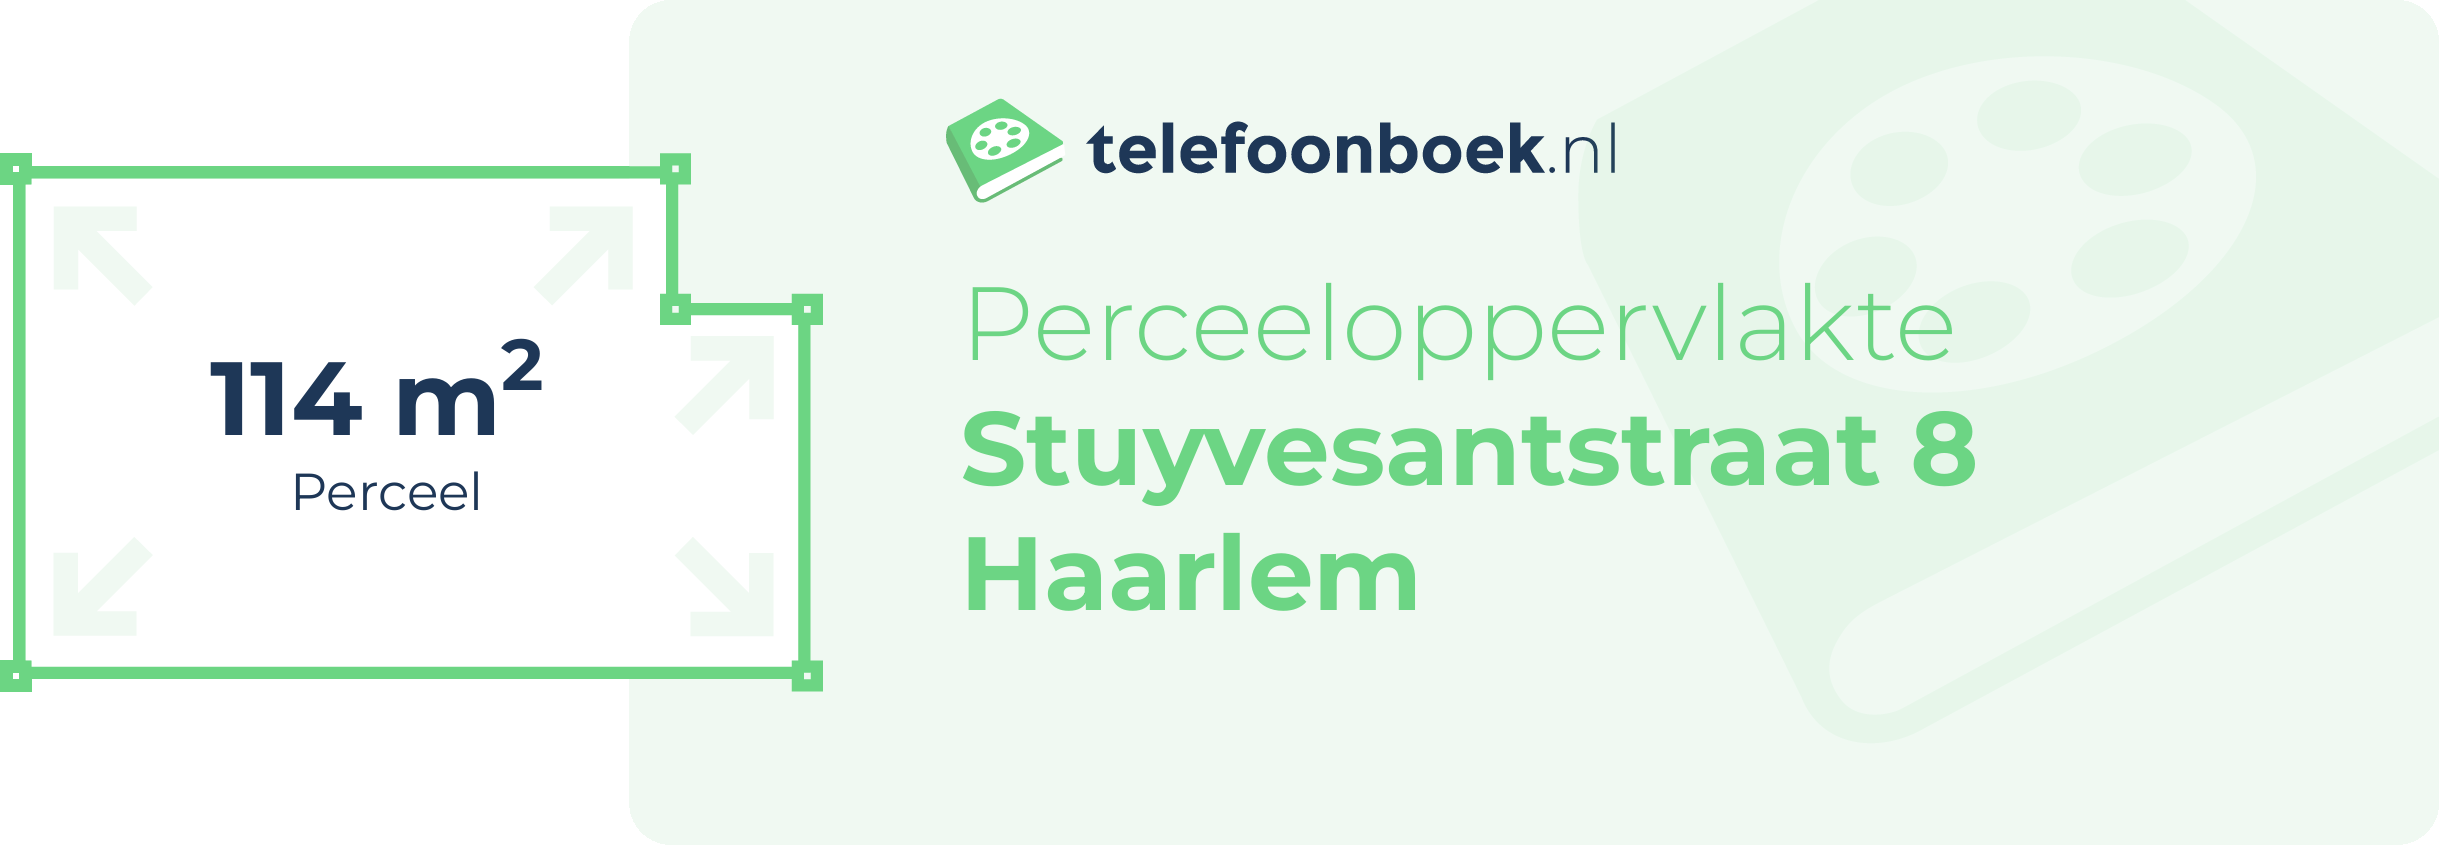 Perceeloppervlakte Stuyvesantstraat 8 Haarlem